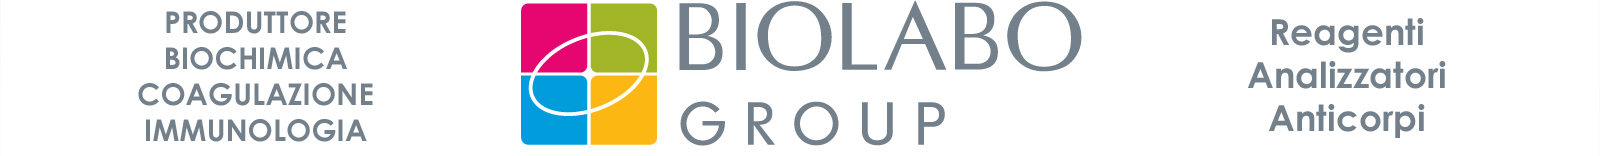 BIOLABO Group, biochimica, goagulazione, analizzatori